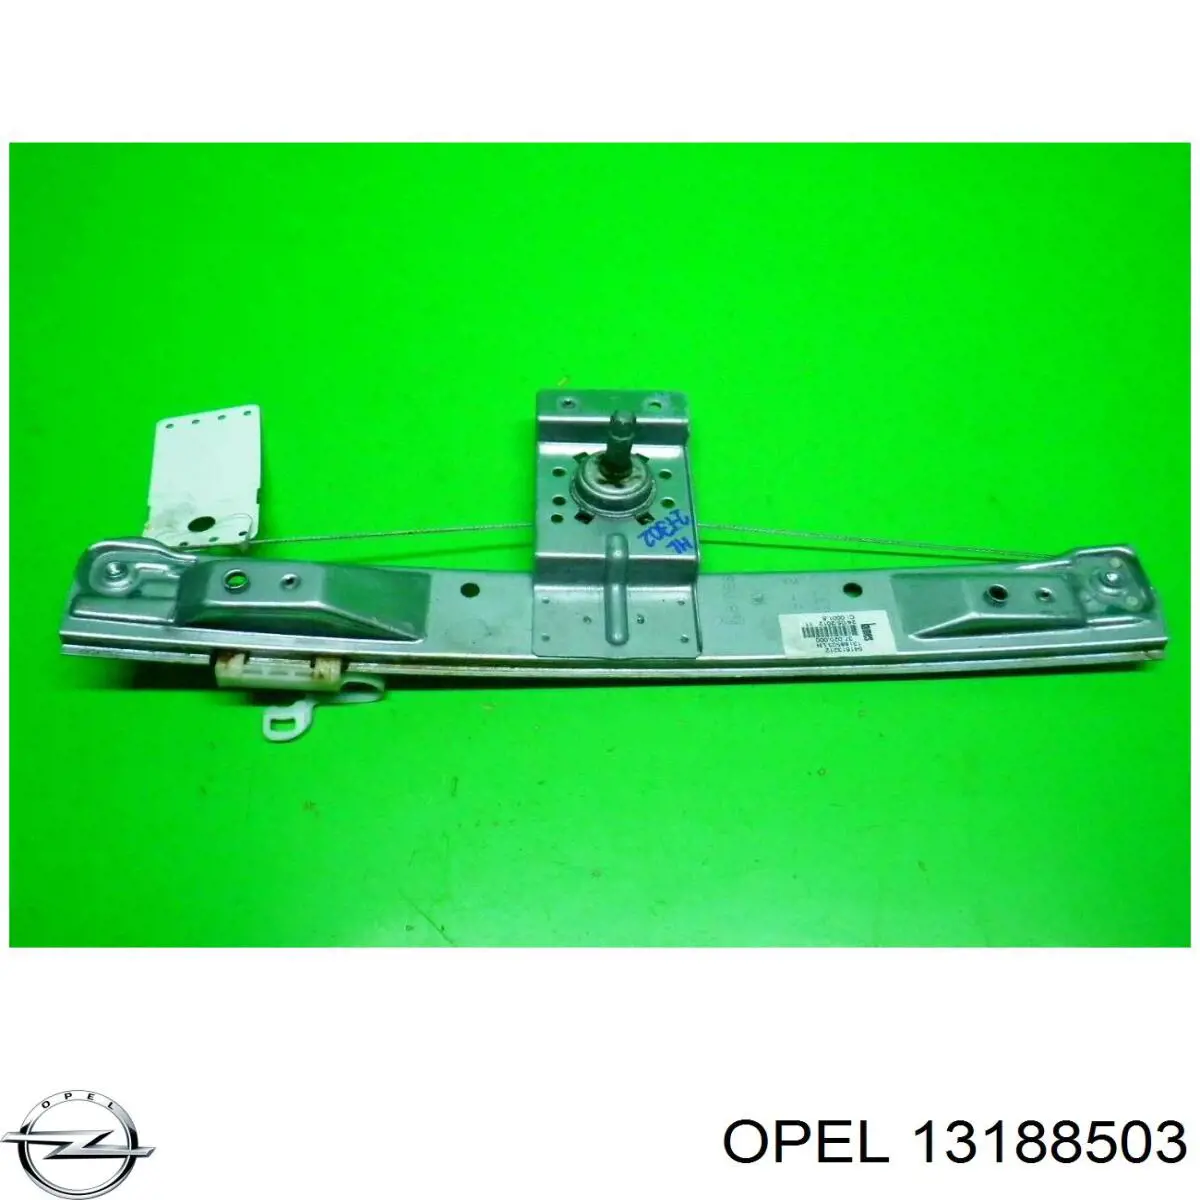 13188503 Opel mecanismo de acionamento de vidro da porta traseira esquerda